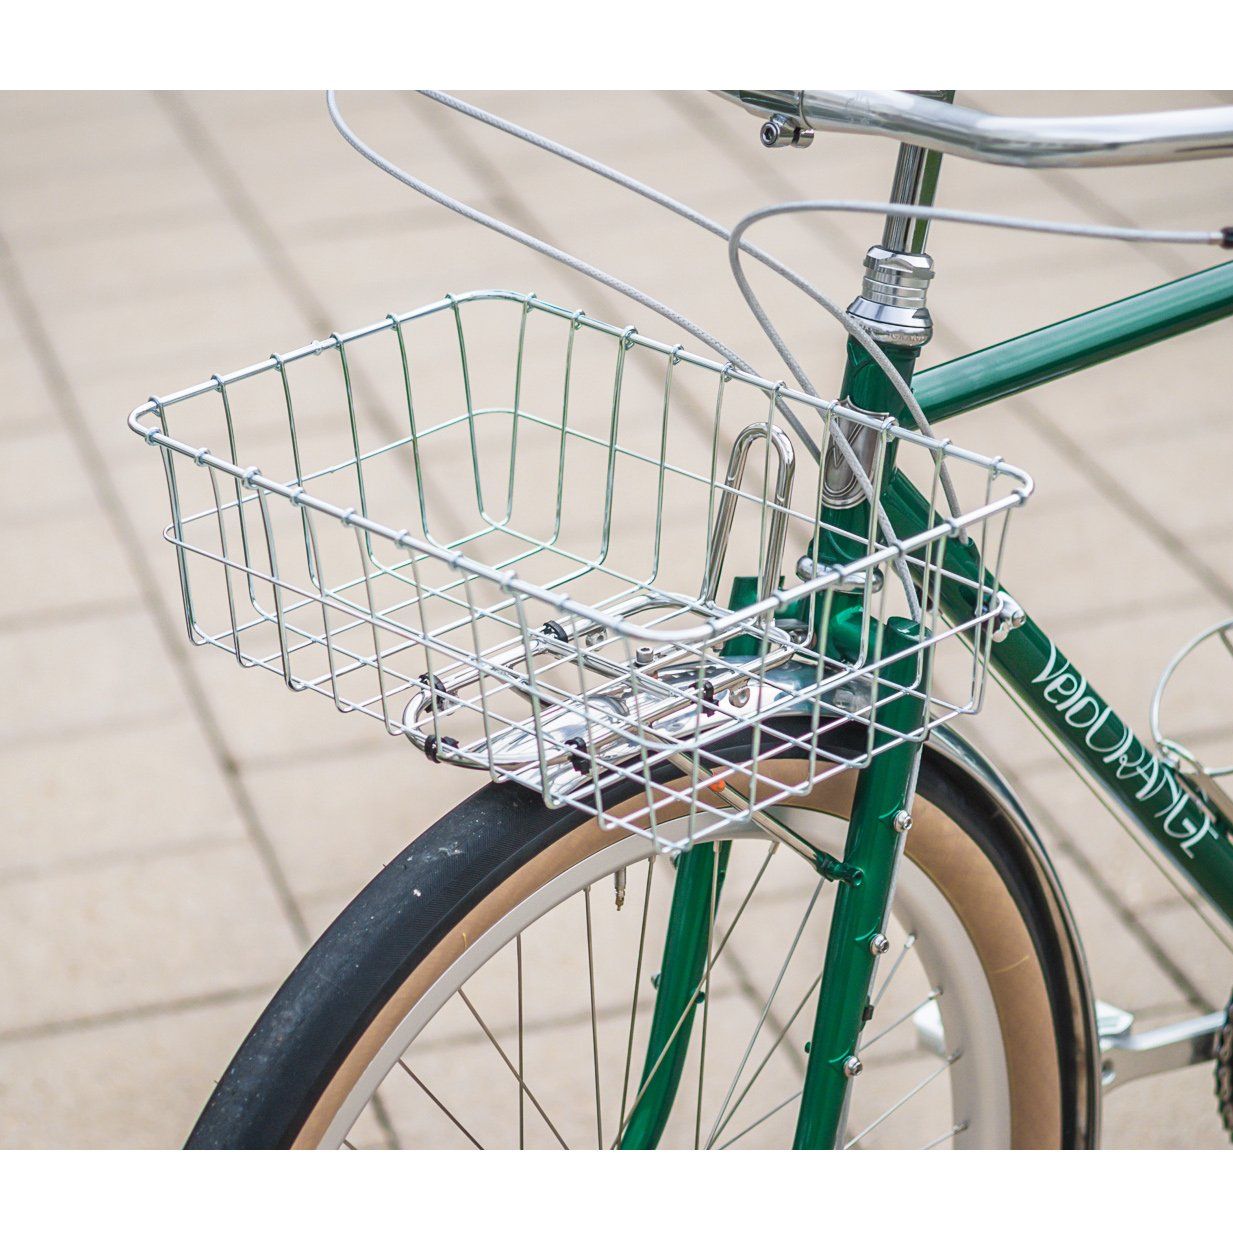 Wald 137 Basket | Racks, Bicycle basket, Steel bicycle